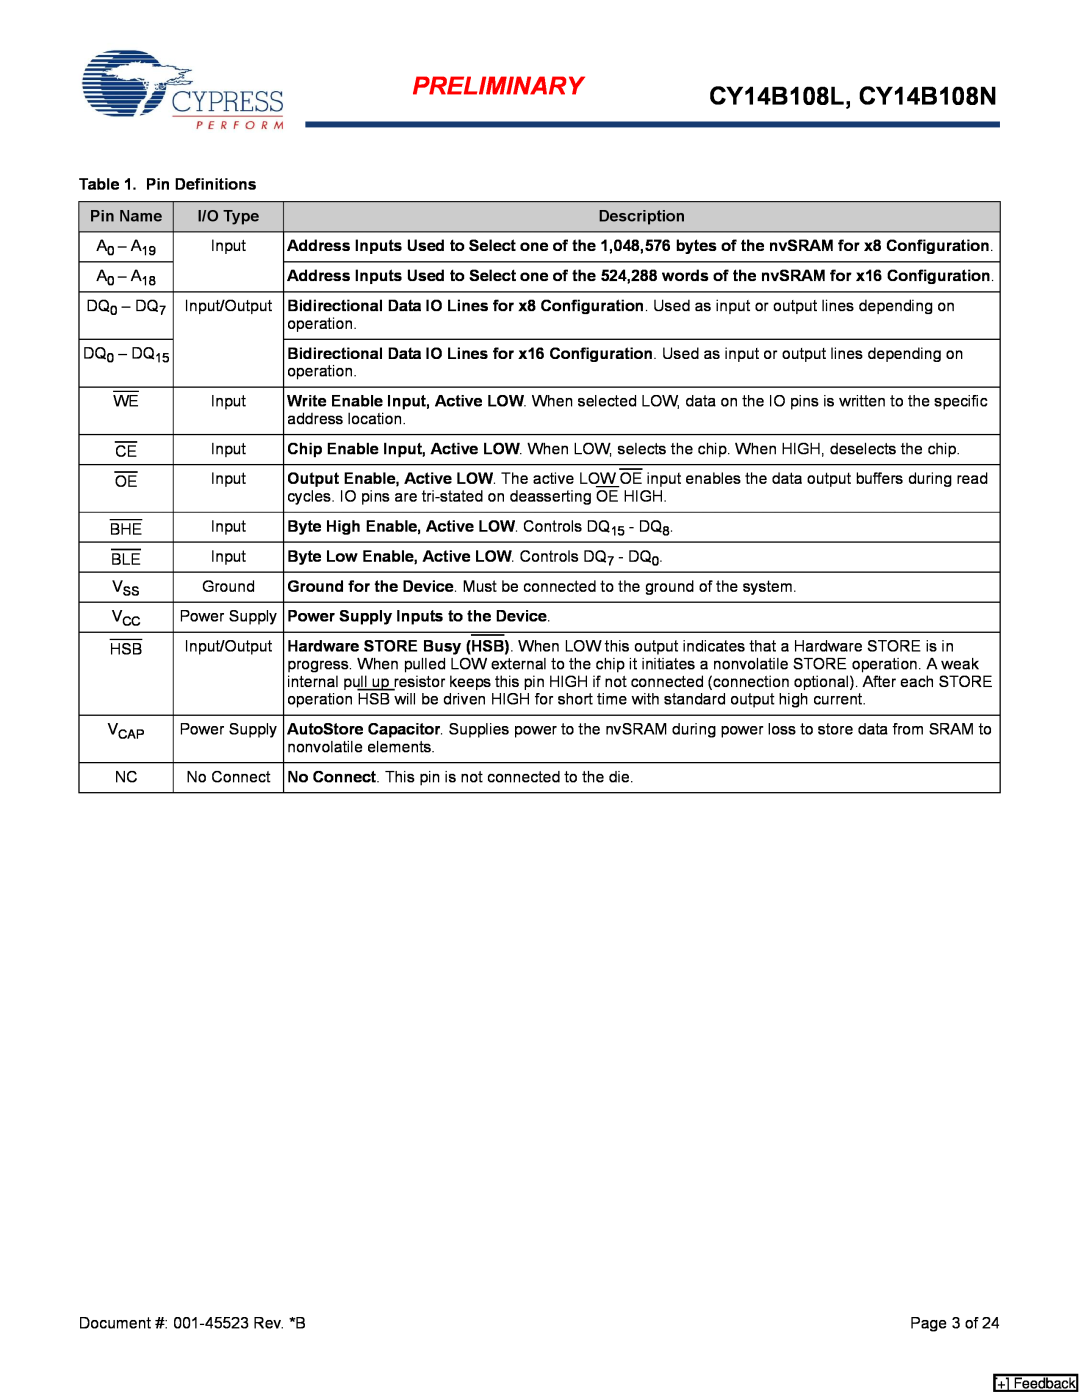 Cypress manual Preliminary, CY14B108L, CY14B108N, Pin Definitions 